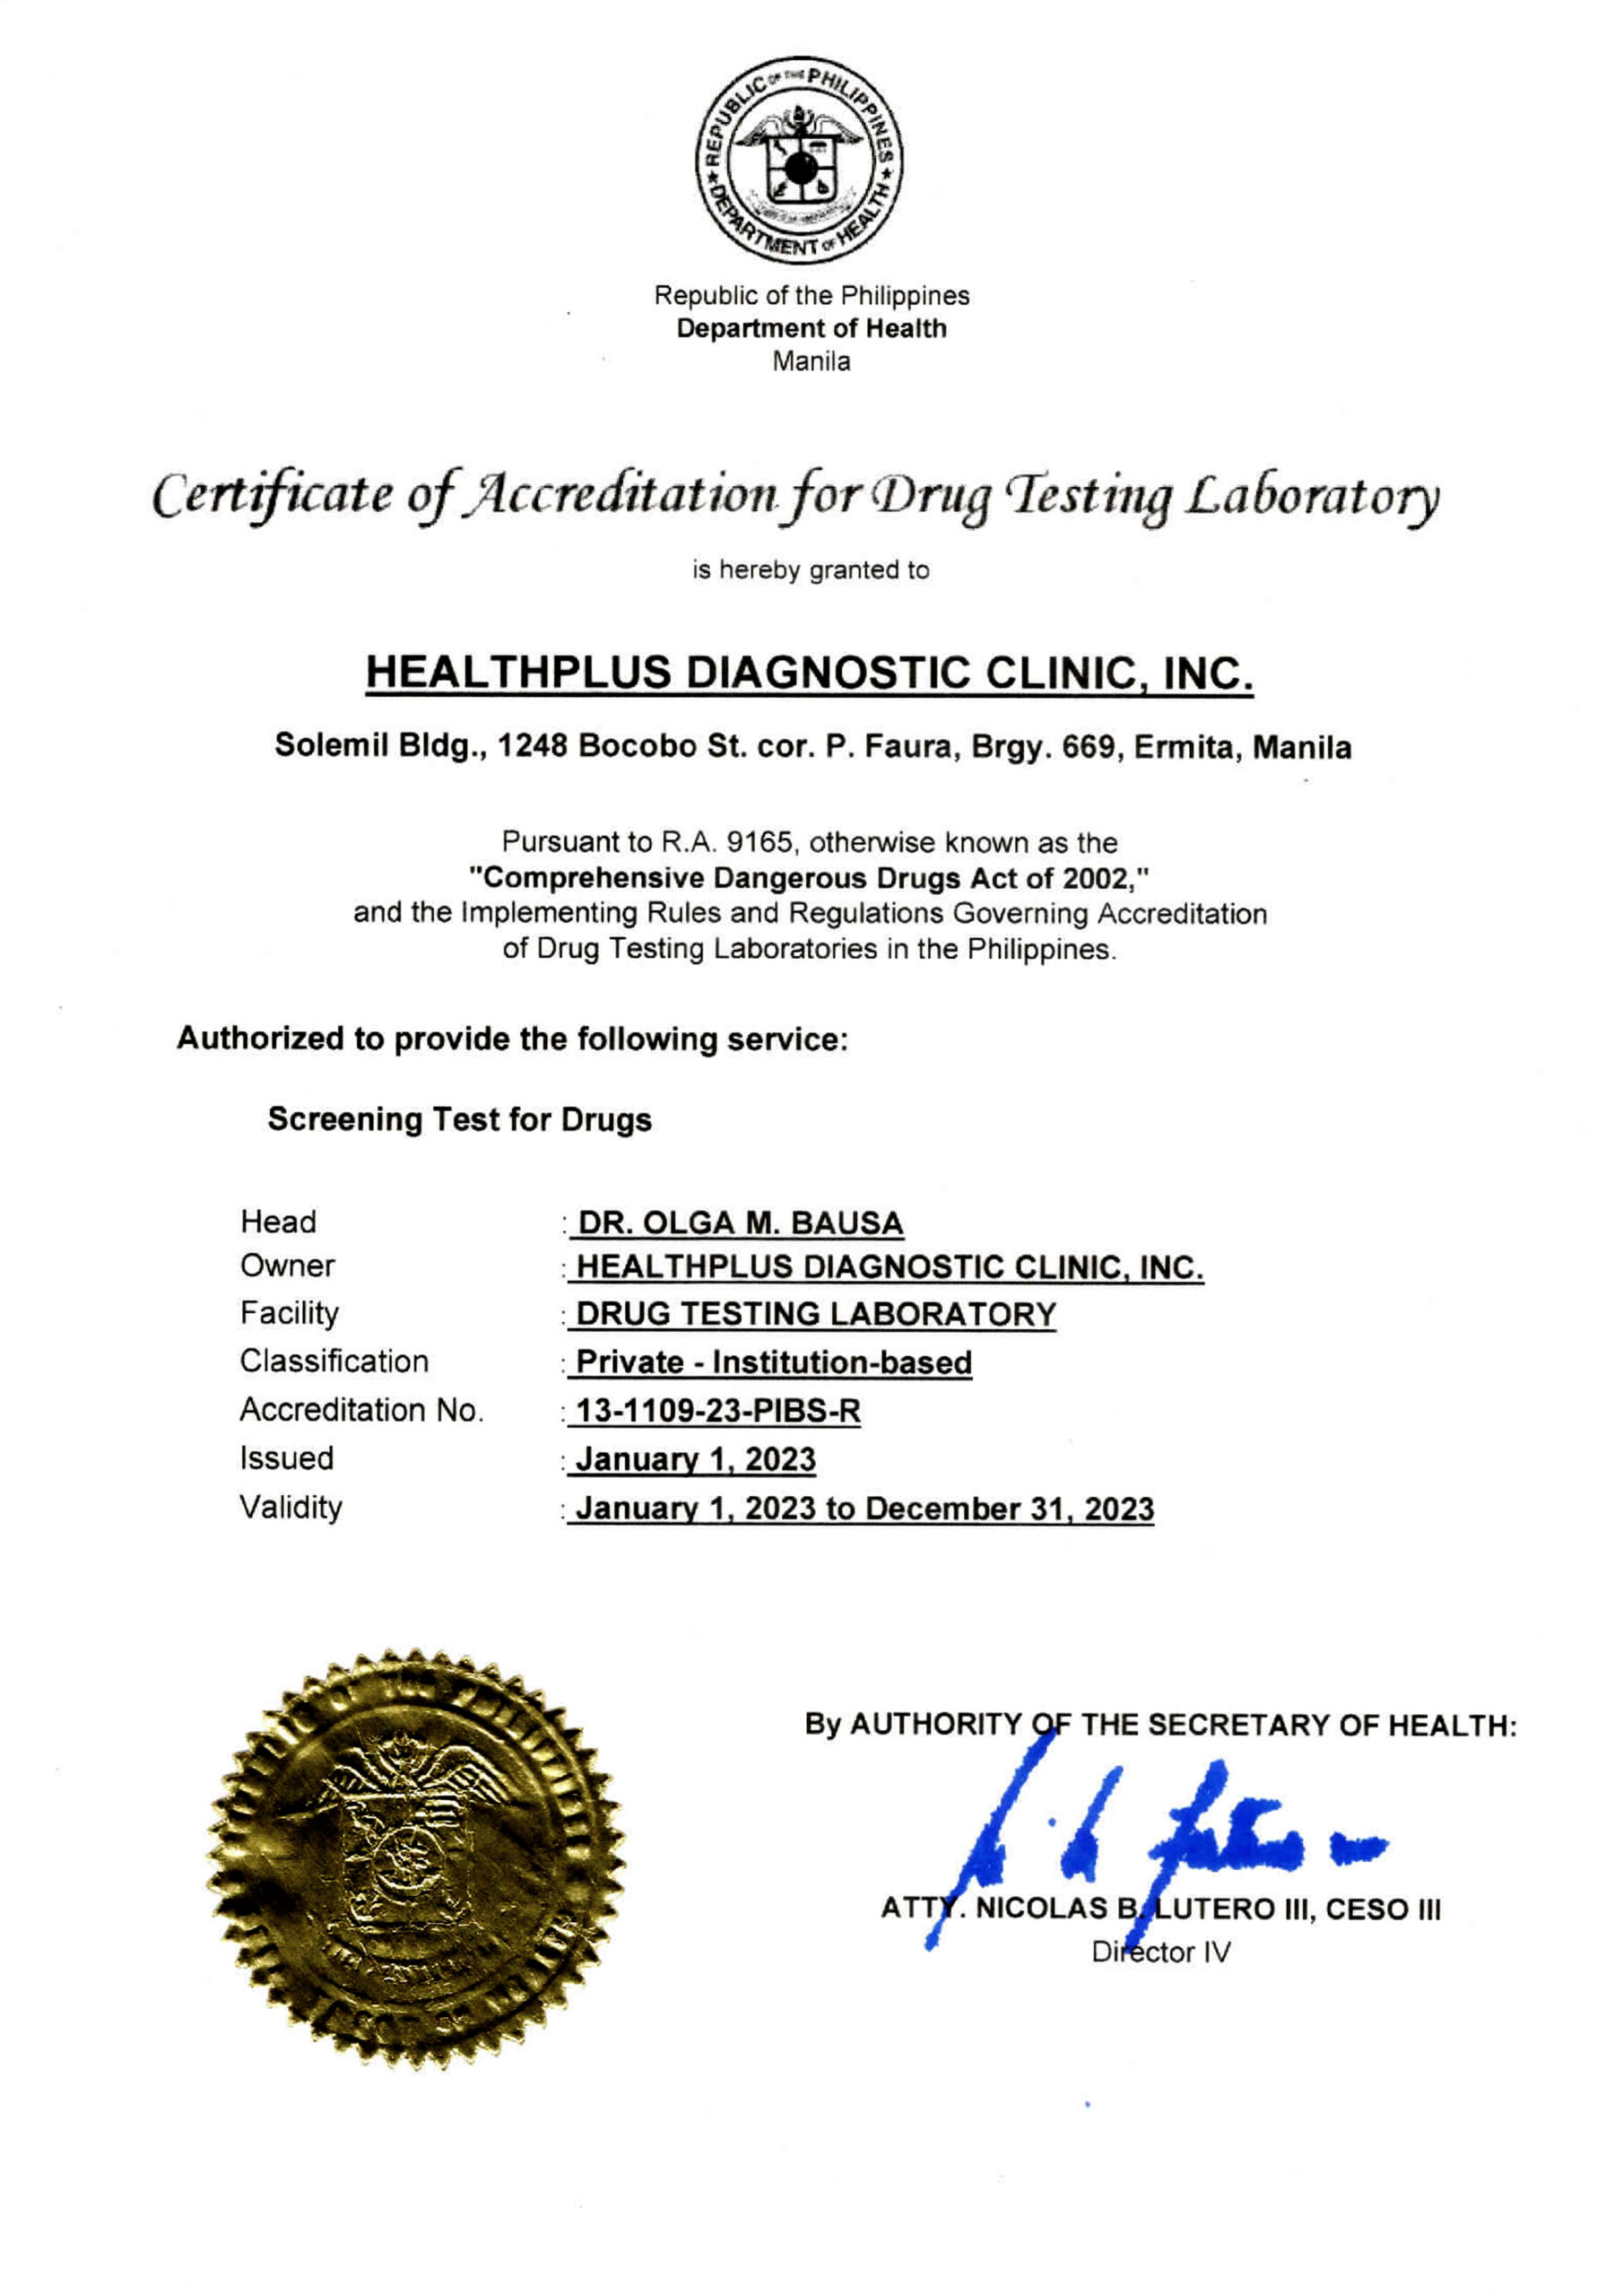 DOH Accreditation as a Drug Testing Laboratory